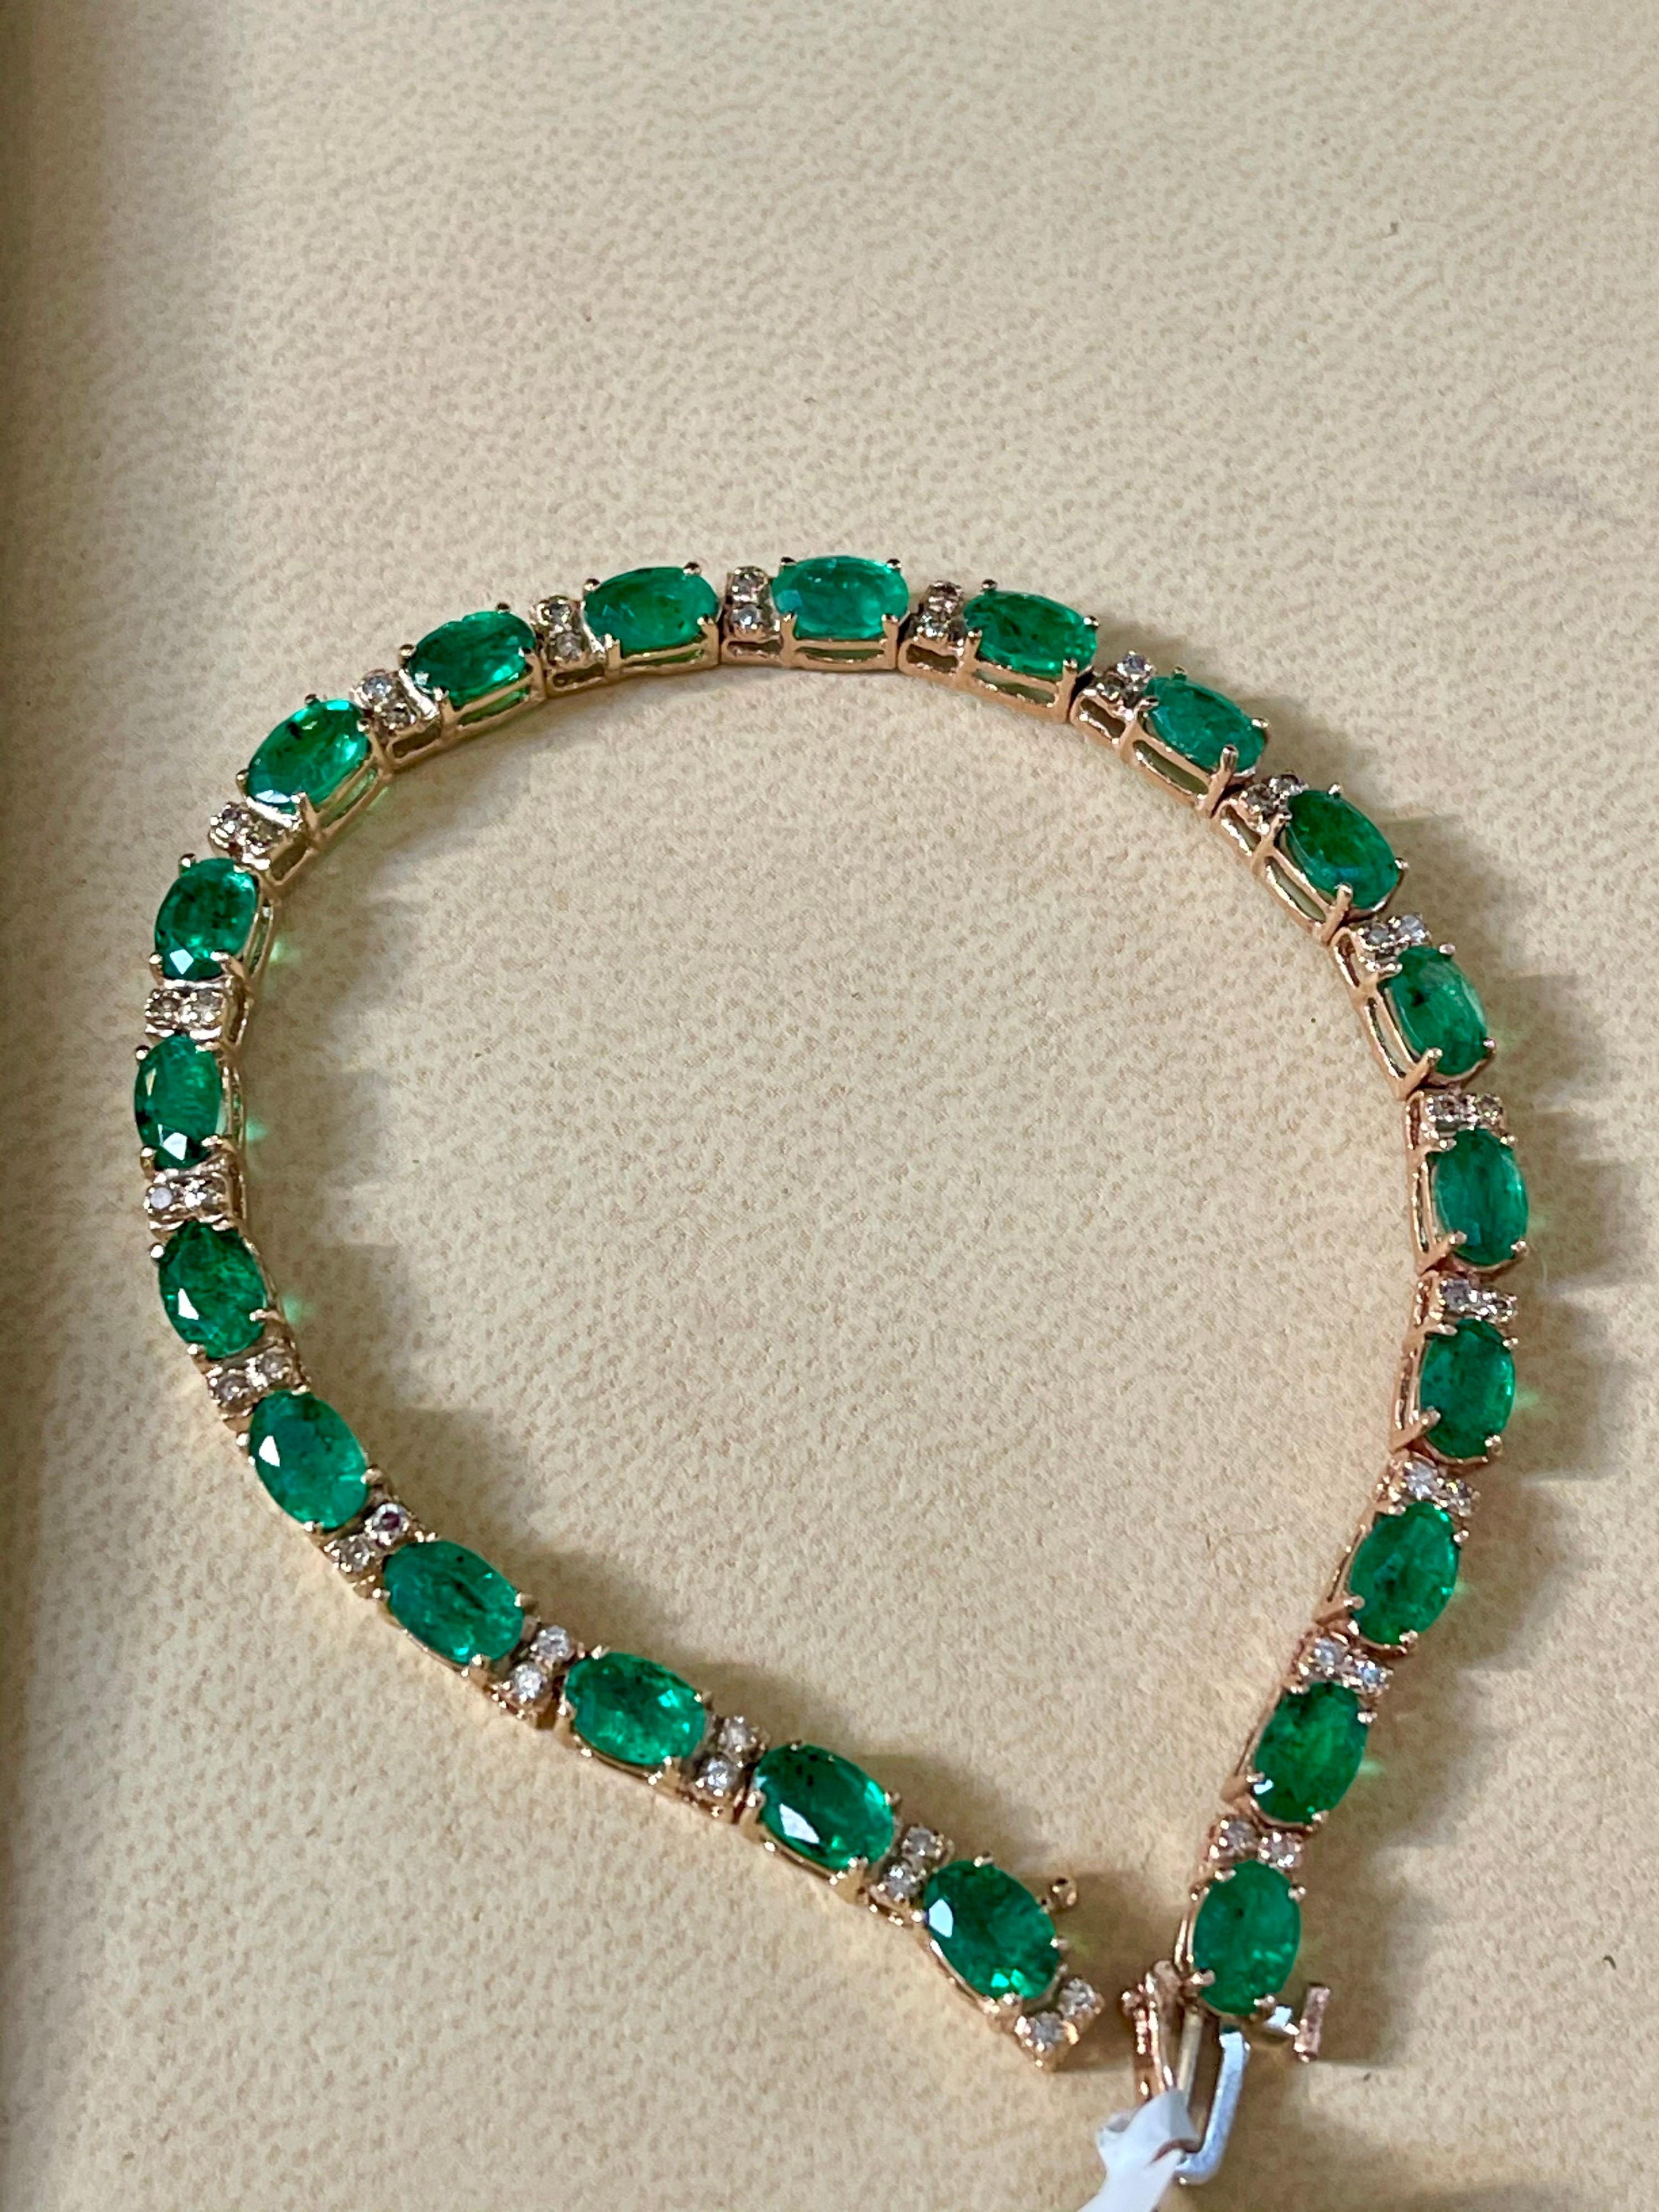 9 Ct Natural Brazilian Emerald and Diamond Tennis Bracelet 14 Karat White Gold 2